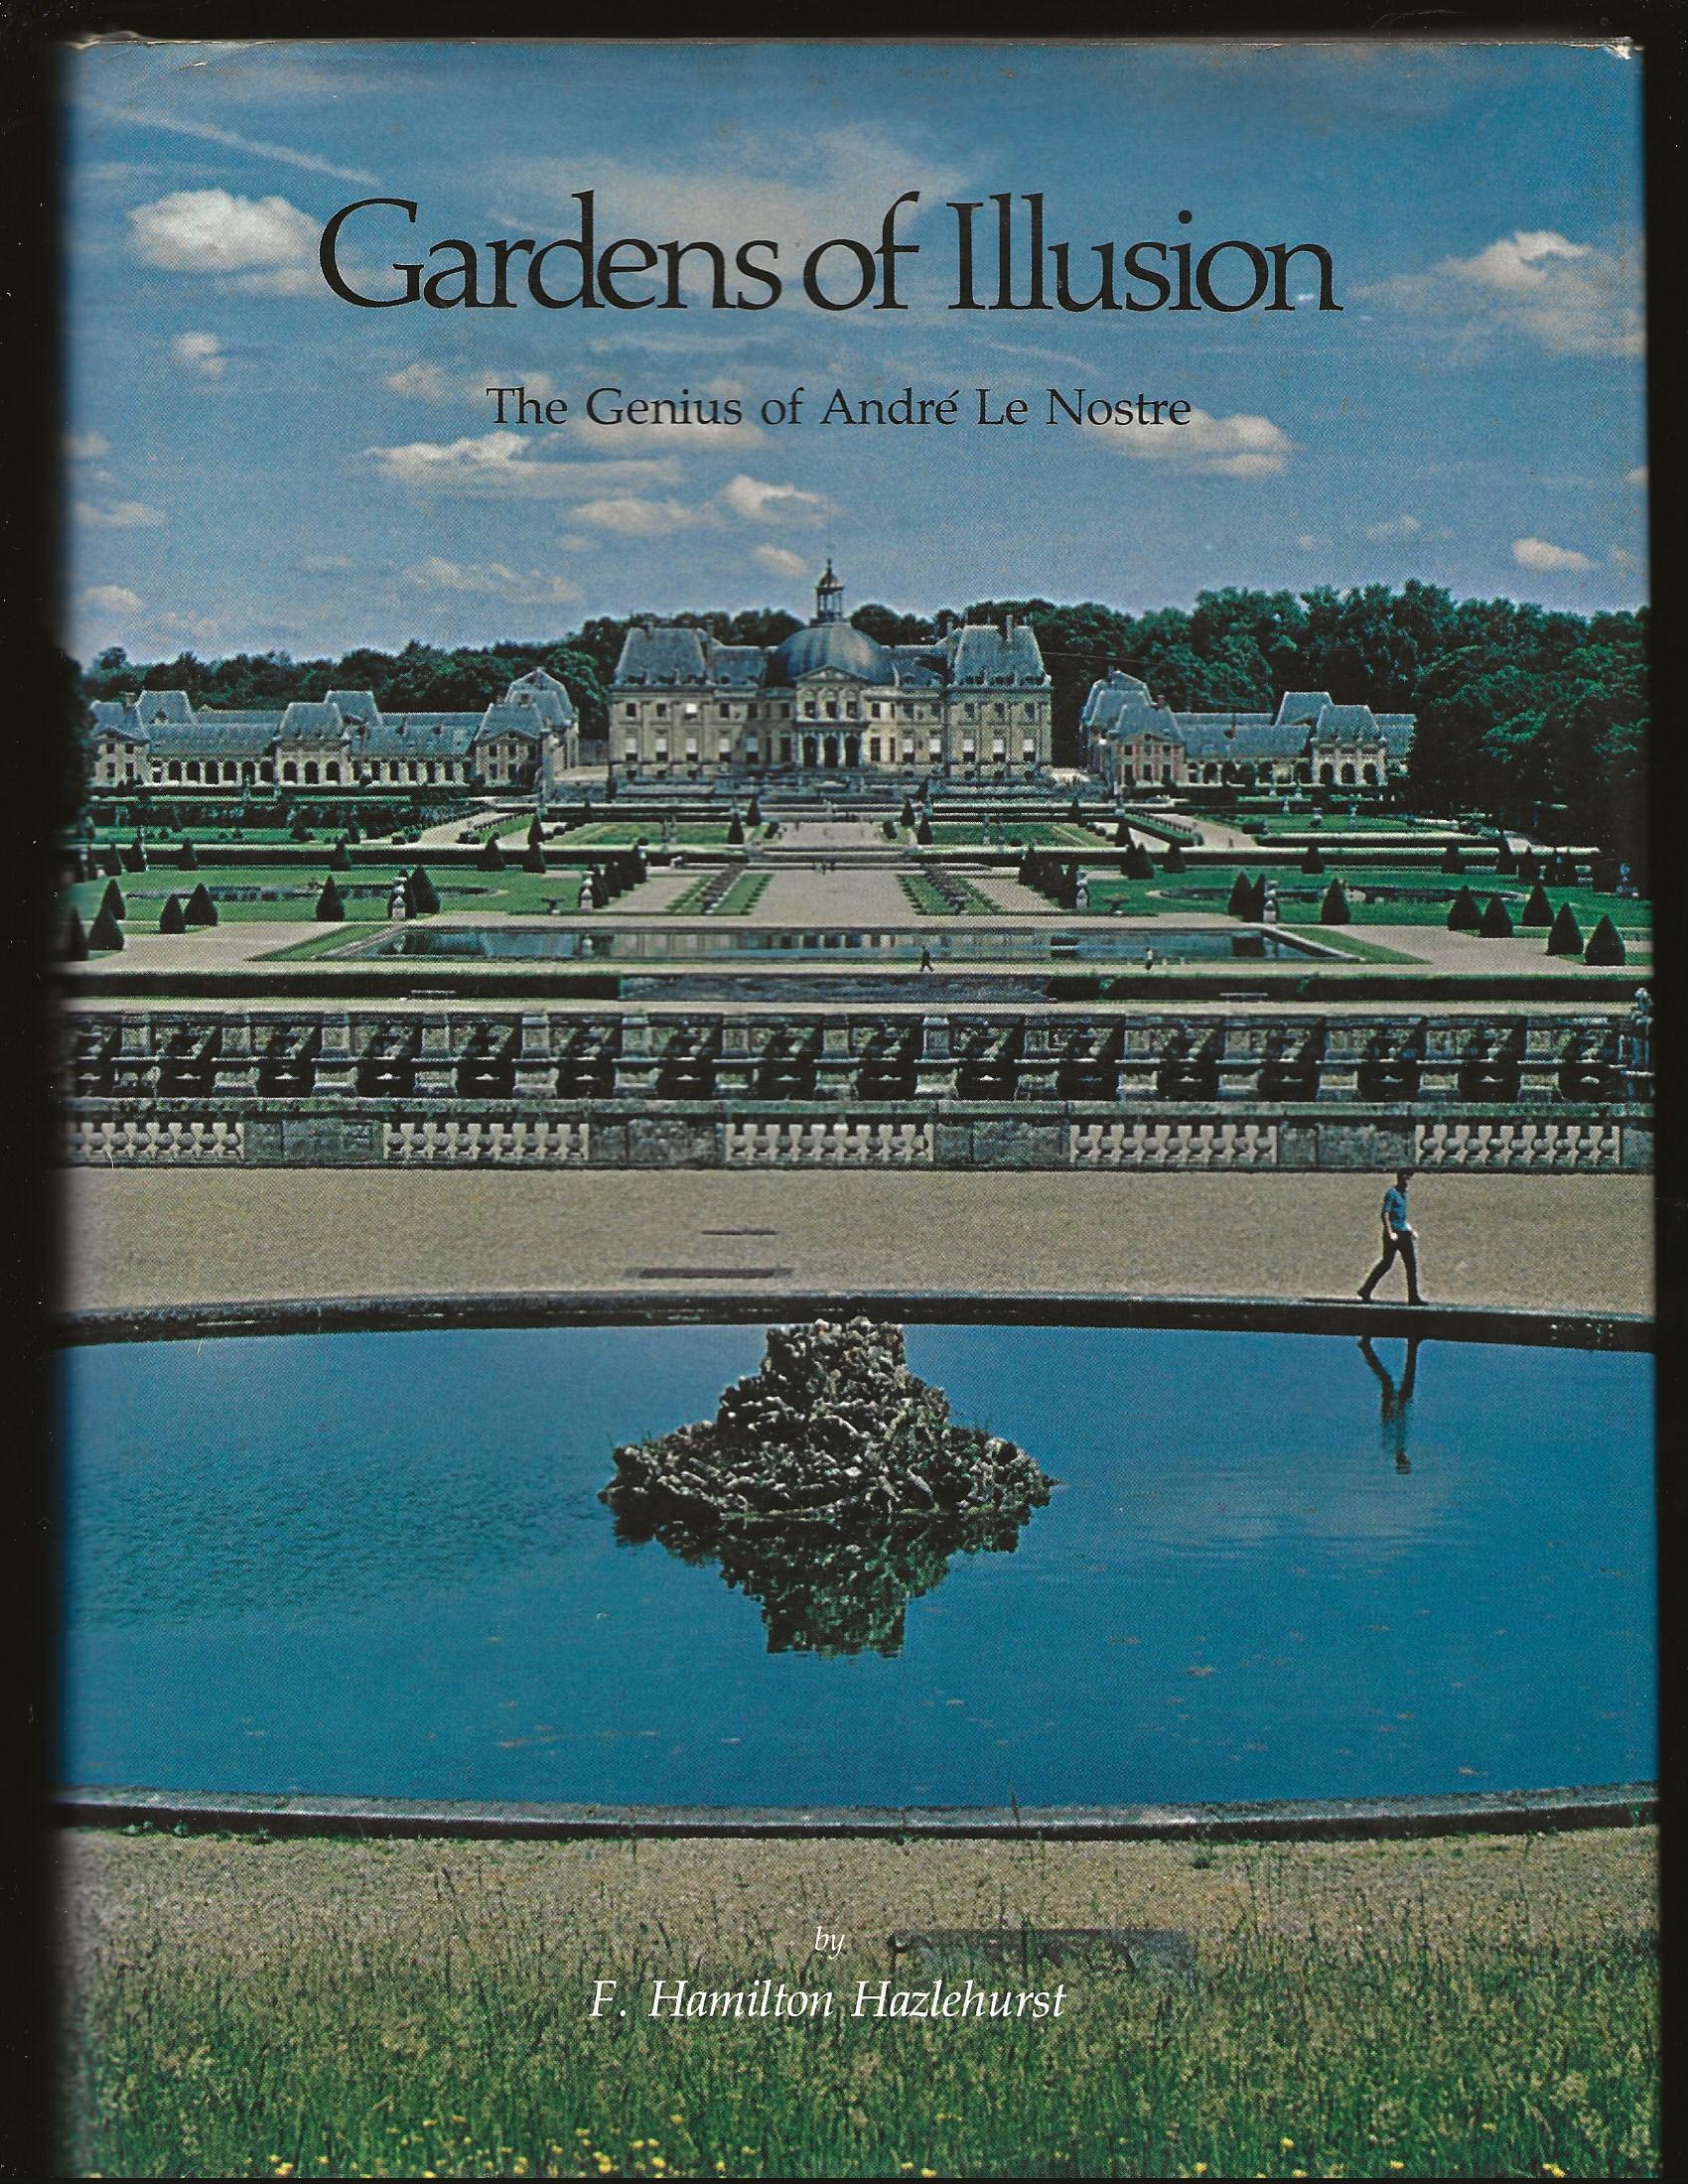 Gardens of Illusion: The Genius of Andre Le Nostre (Only Signed Copy) - F. Hamilton Hazlehurst